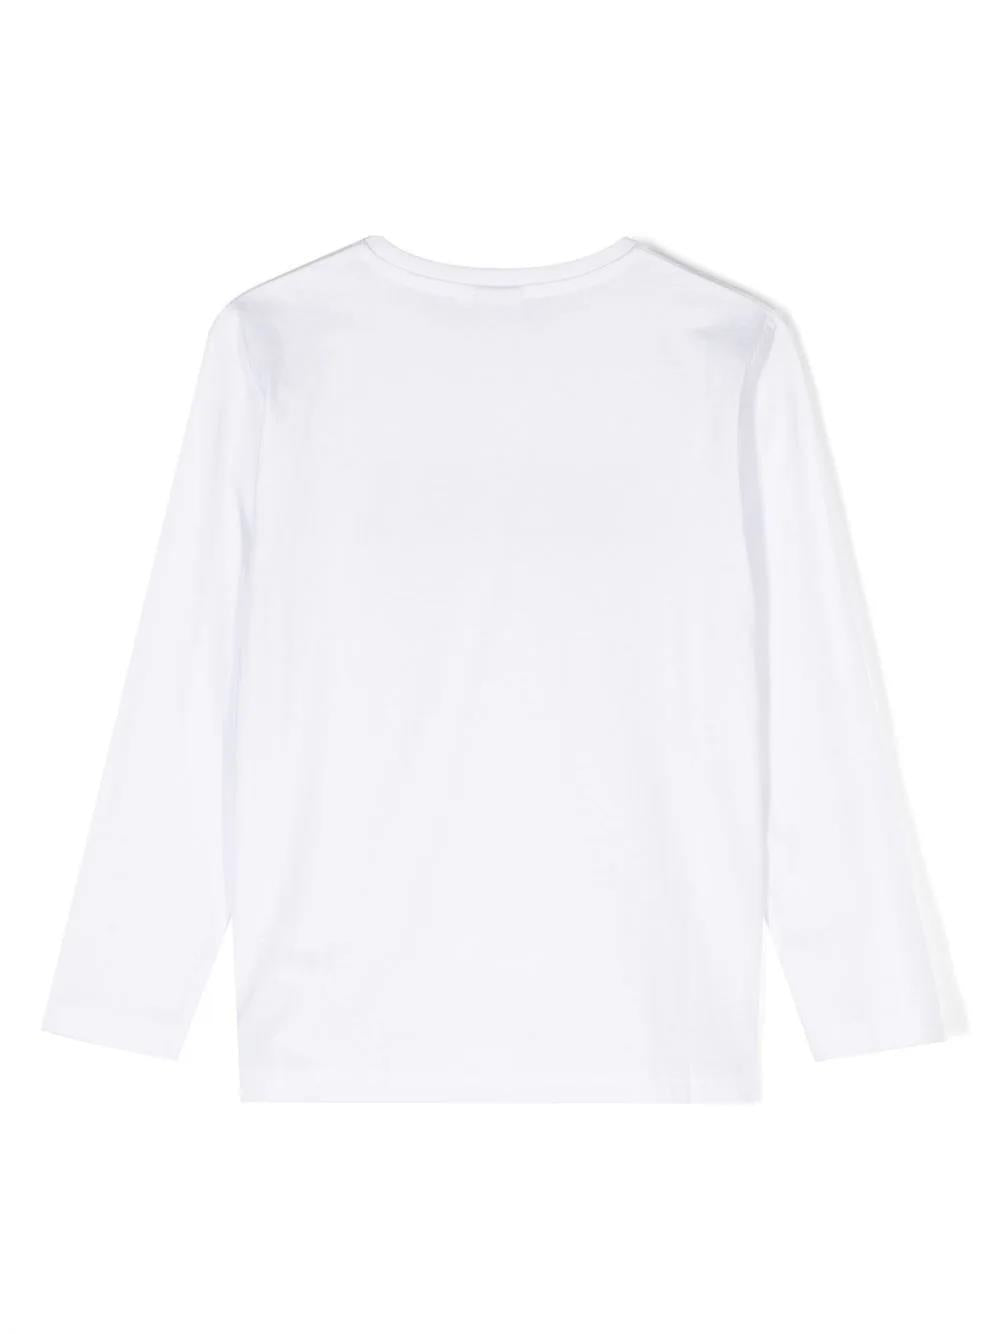 White cotton jersey boy HUGO BOSS t-shirt | Carofiglio Junior